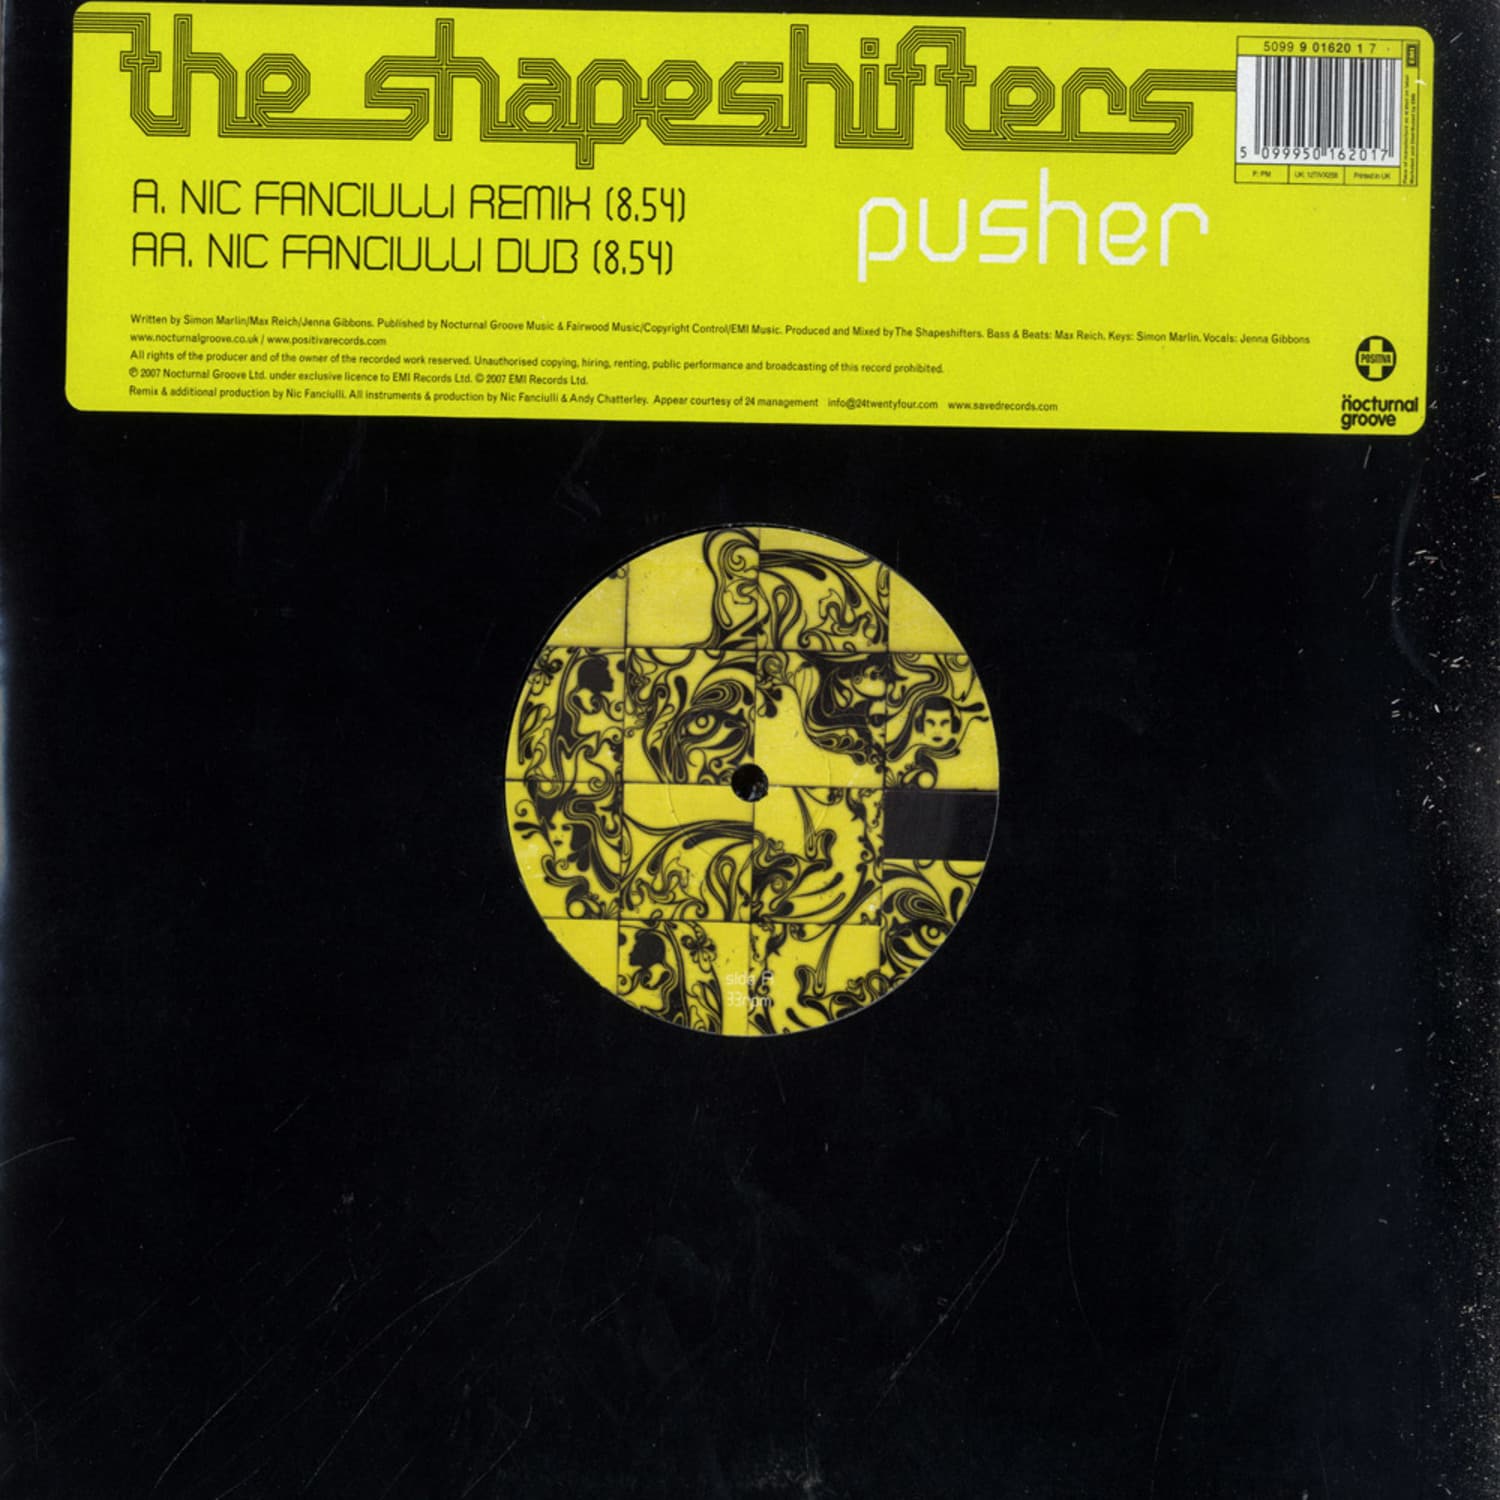 The Shapeshifters - PUSHER - NIC FANCIULLI REMIX